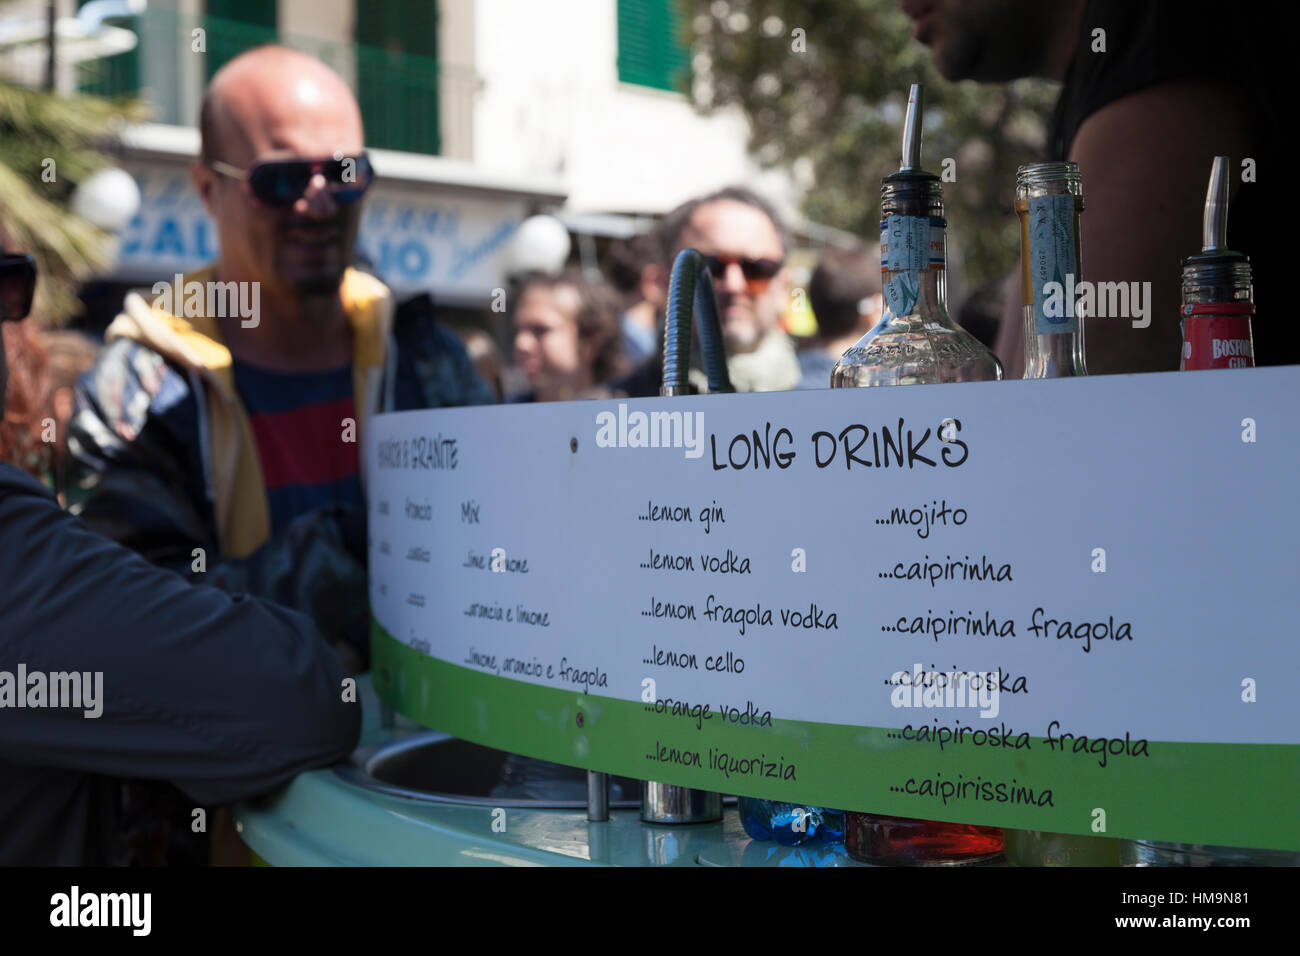 Long drinks list at street food festival Stock Photo